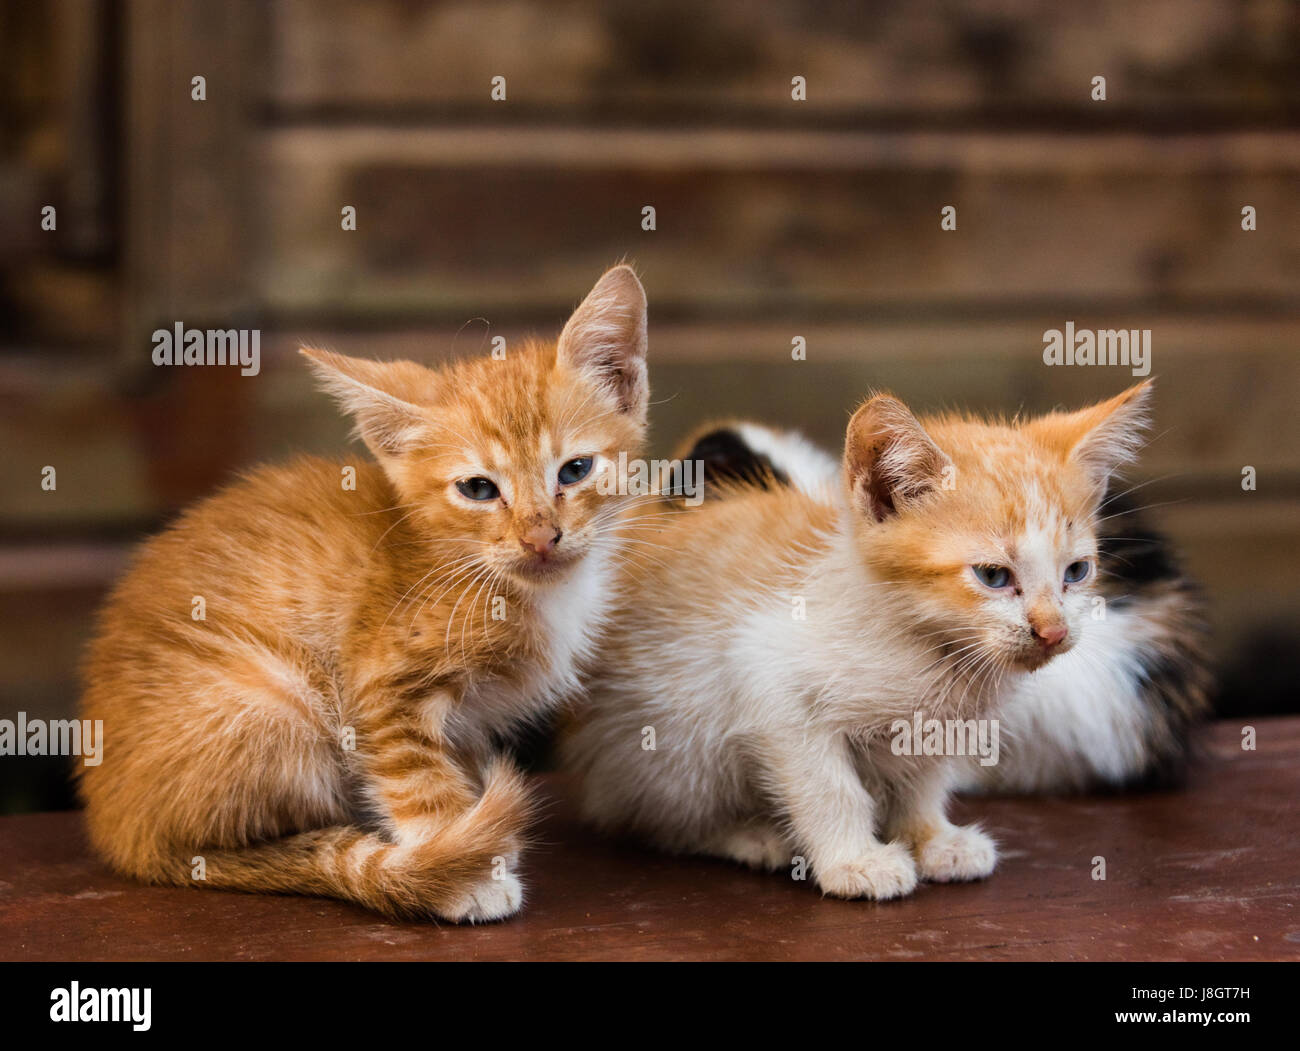 Three Kittens Huddled Together Stock Photo - Alamy